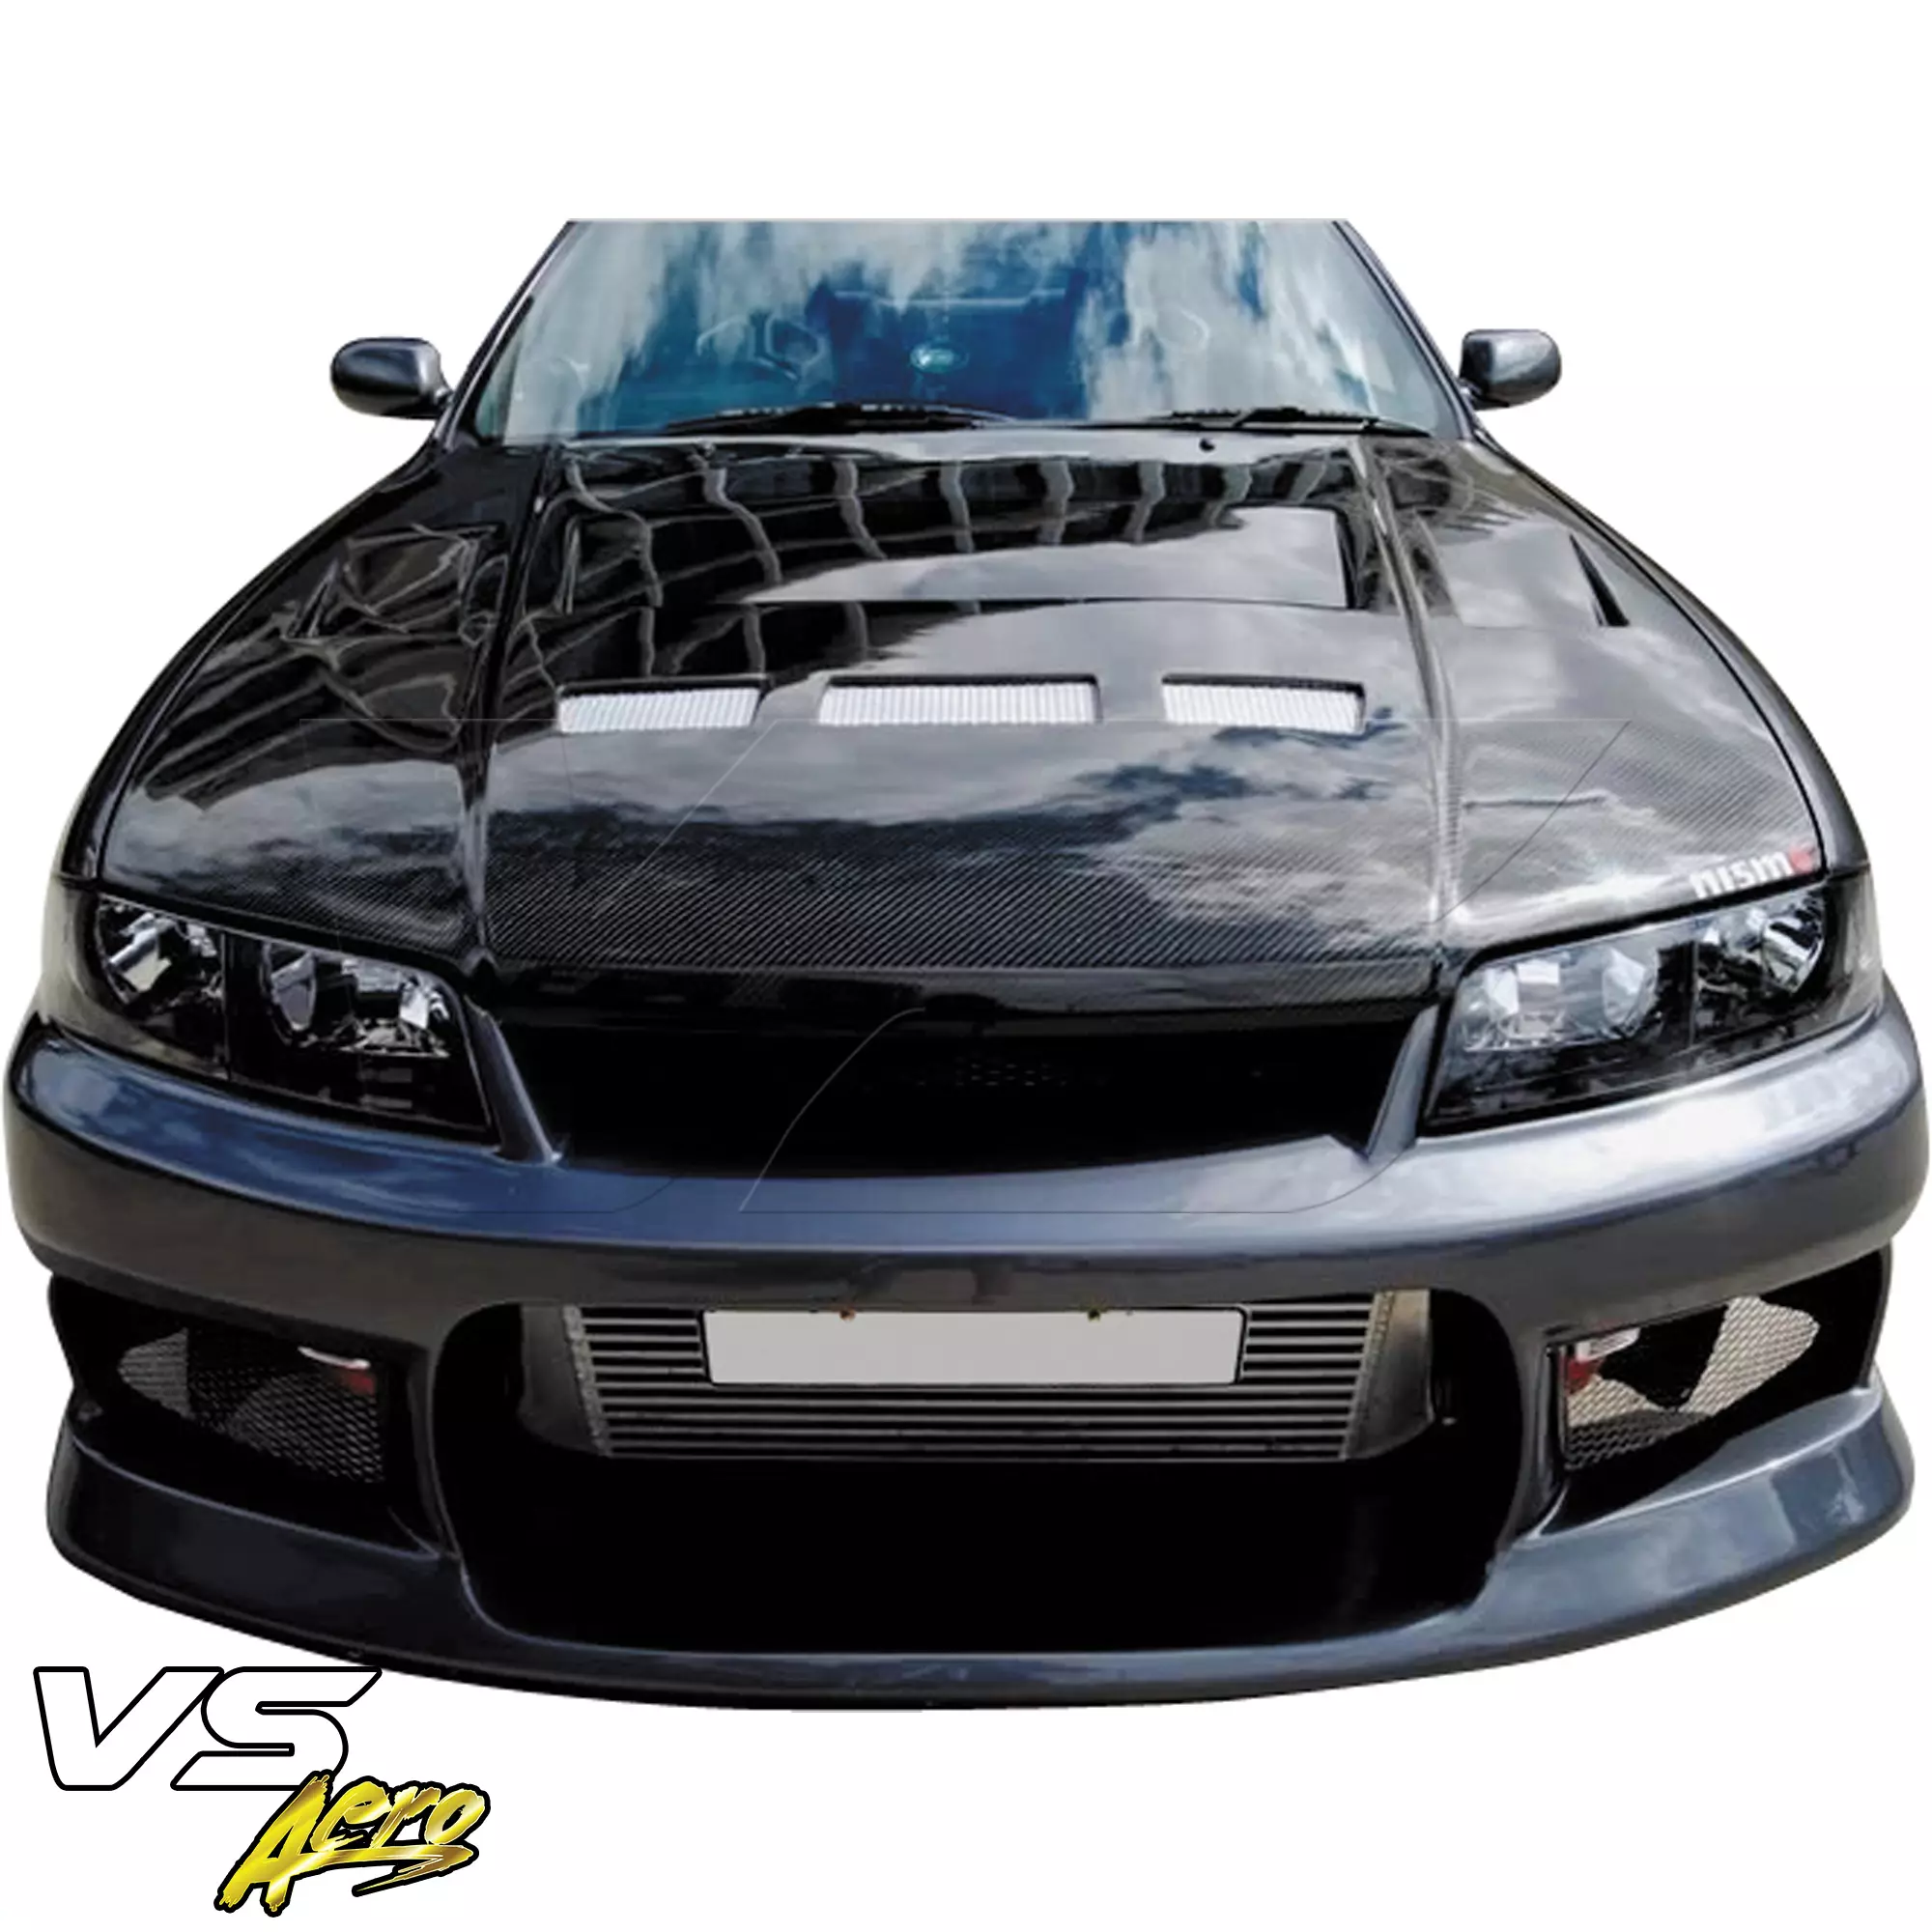 VSaero FRP MSPO v2 Body Kit 4pc > Nissan Skyline R33 GTS 1995-1998 > 2dr Coupe - Image 9